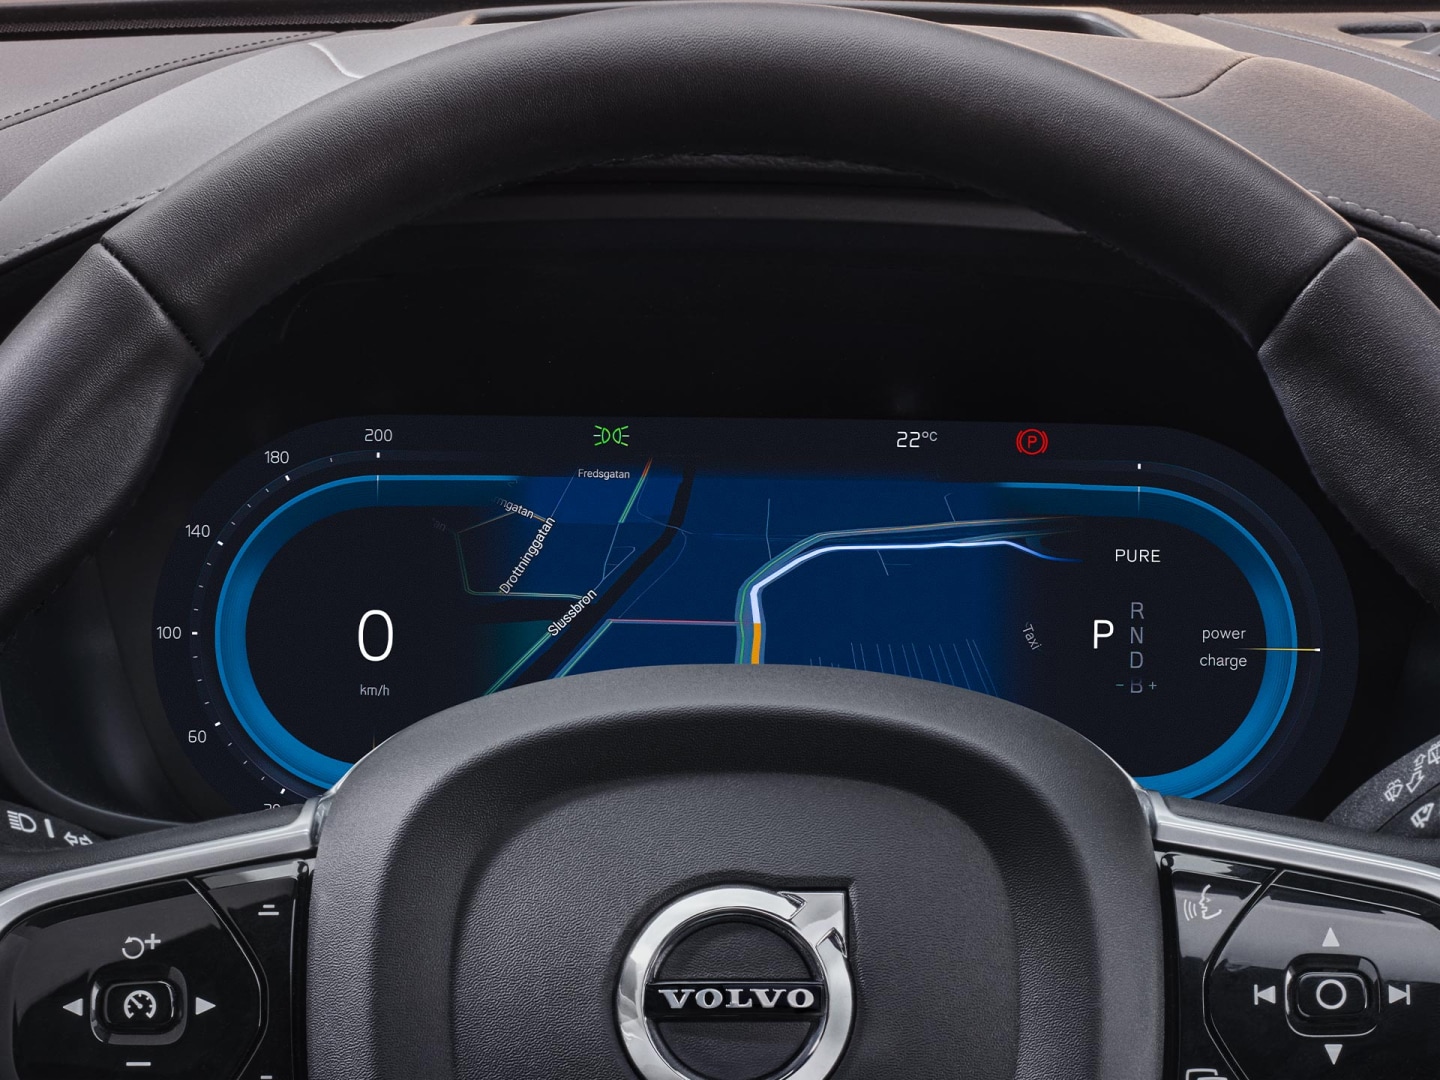 Blick vom Fahrersitz auf Lenkrad und Fahrerdisplay des Volvo V90 Plug-in Hybrid.